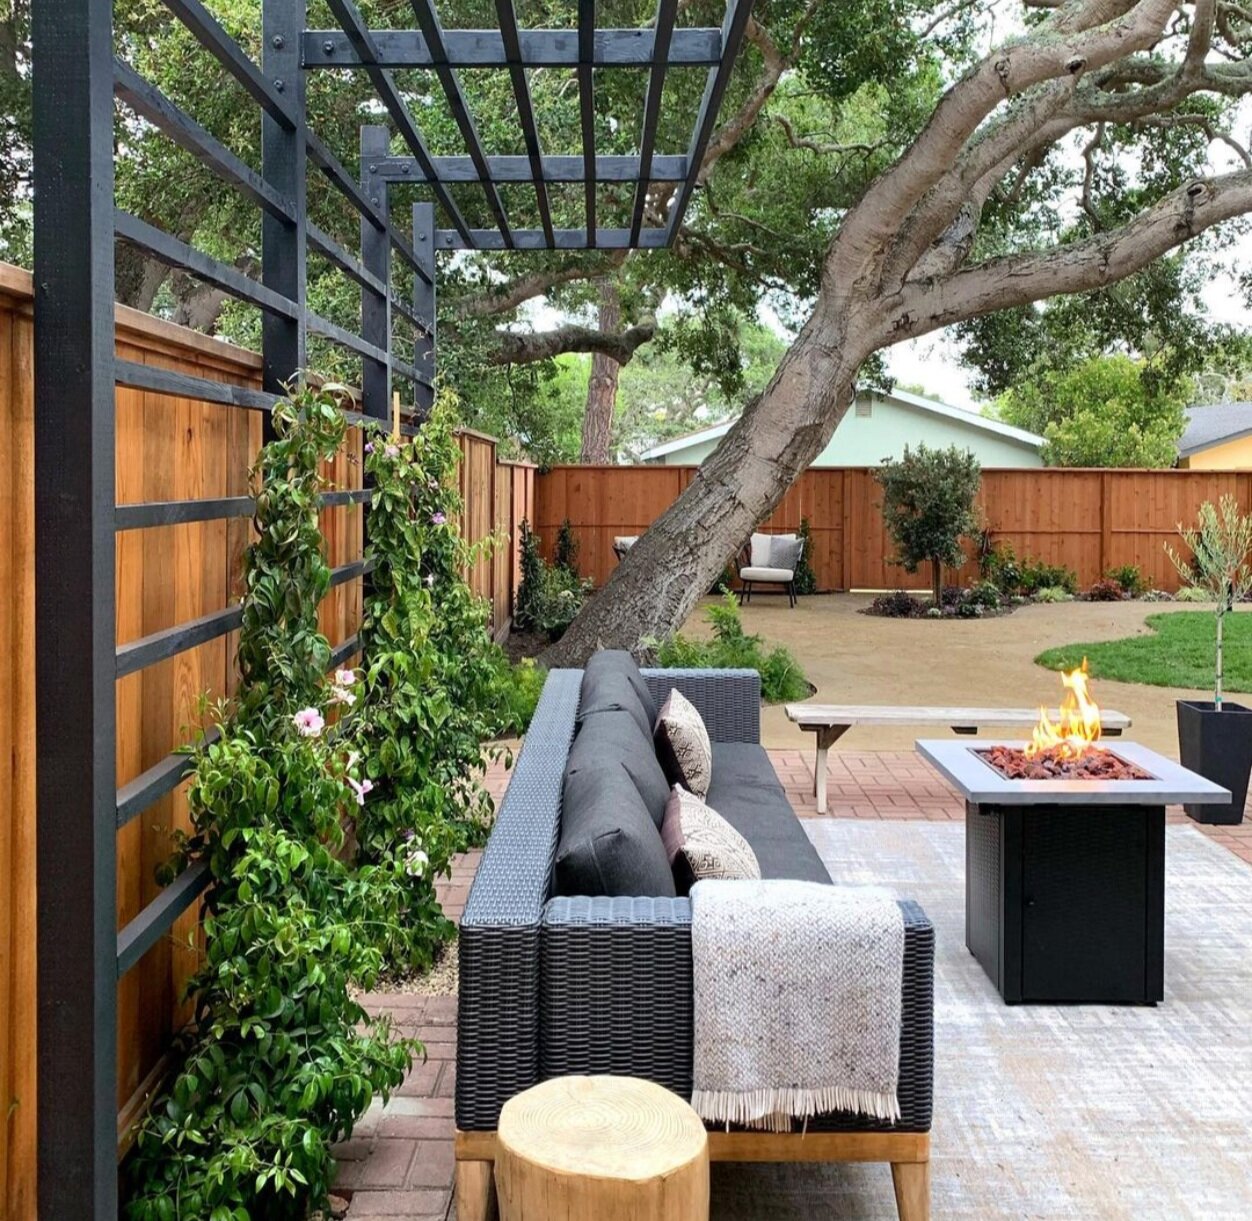 Yardzen backyard patio with brick pavers, fire pit, and patio furniture via @kismet_house